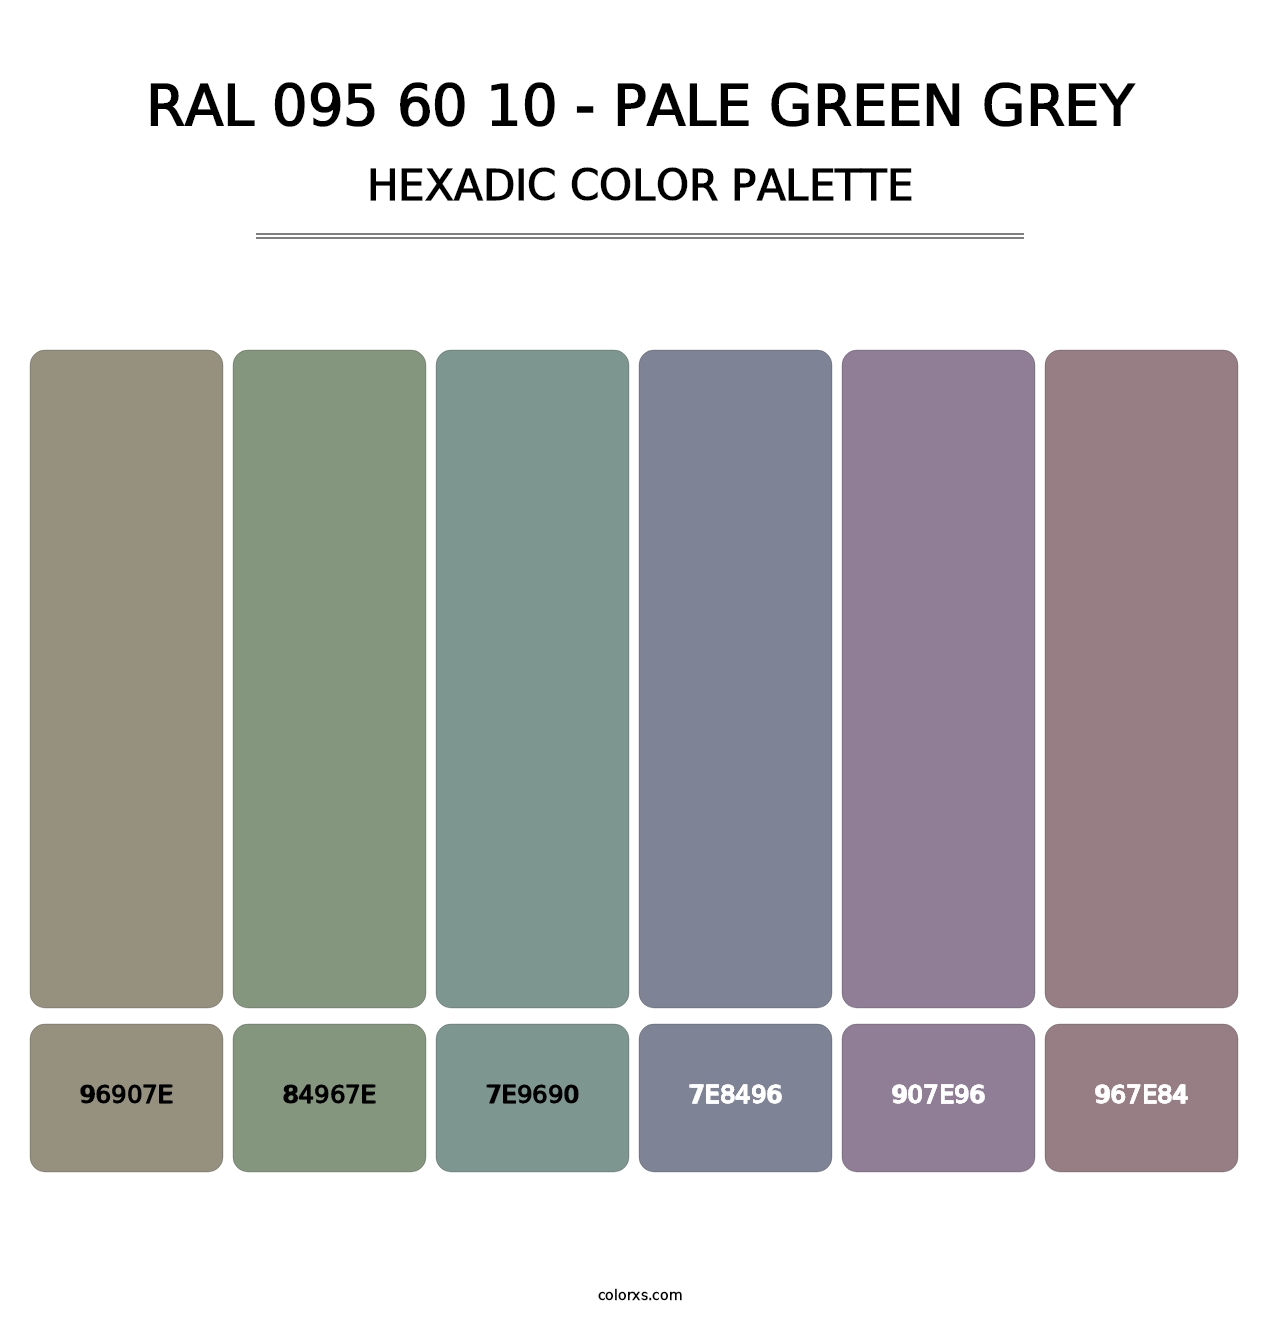 RAL 095 60 10 - Pale Green Grey - Hexadic Color Palette